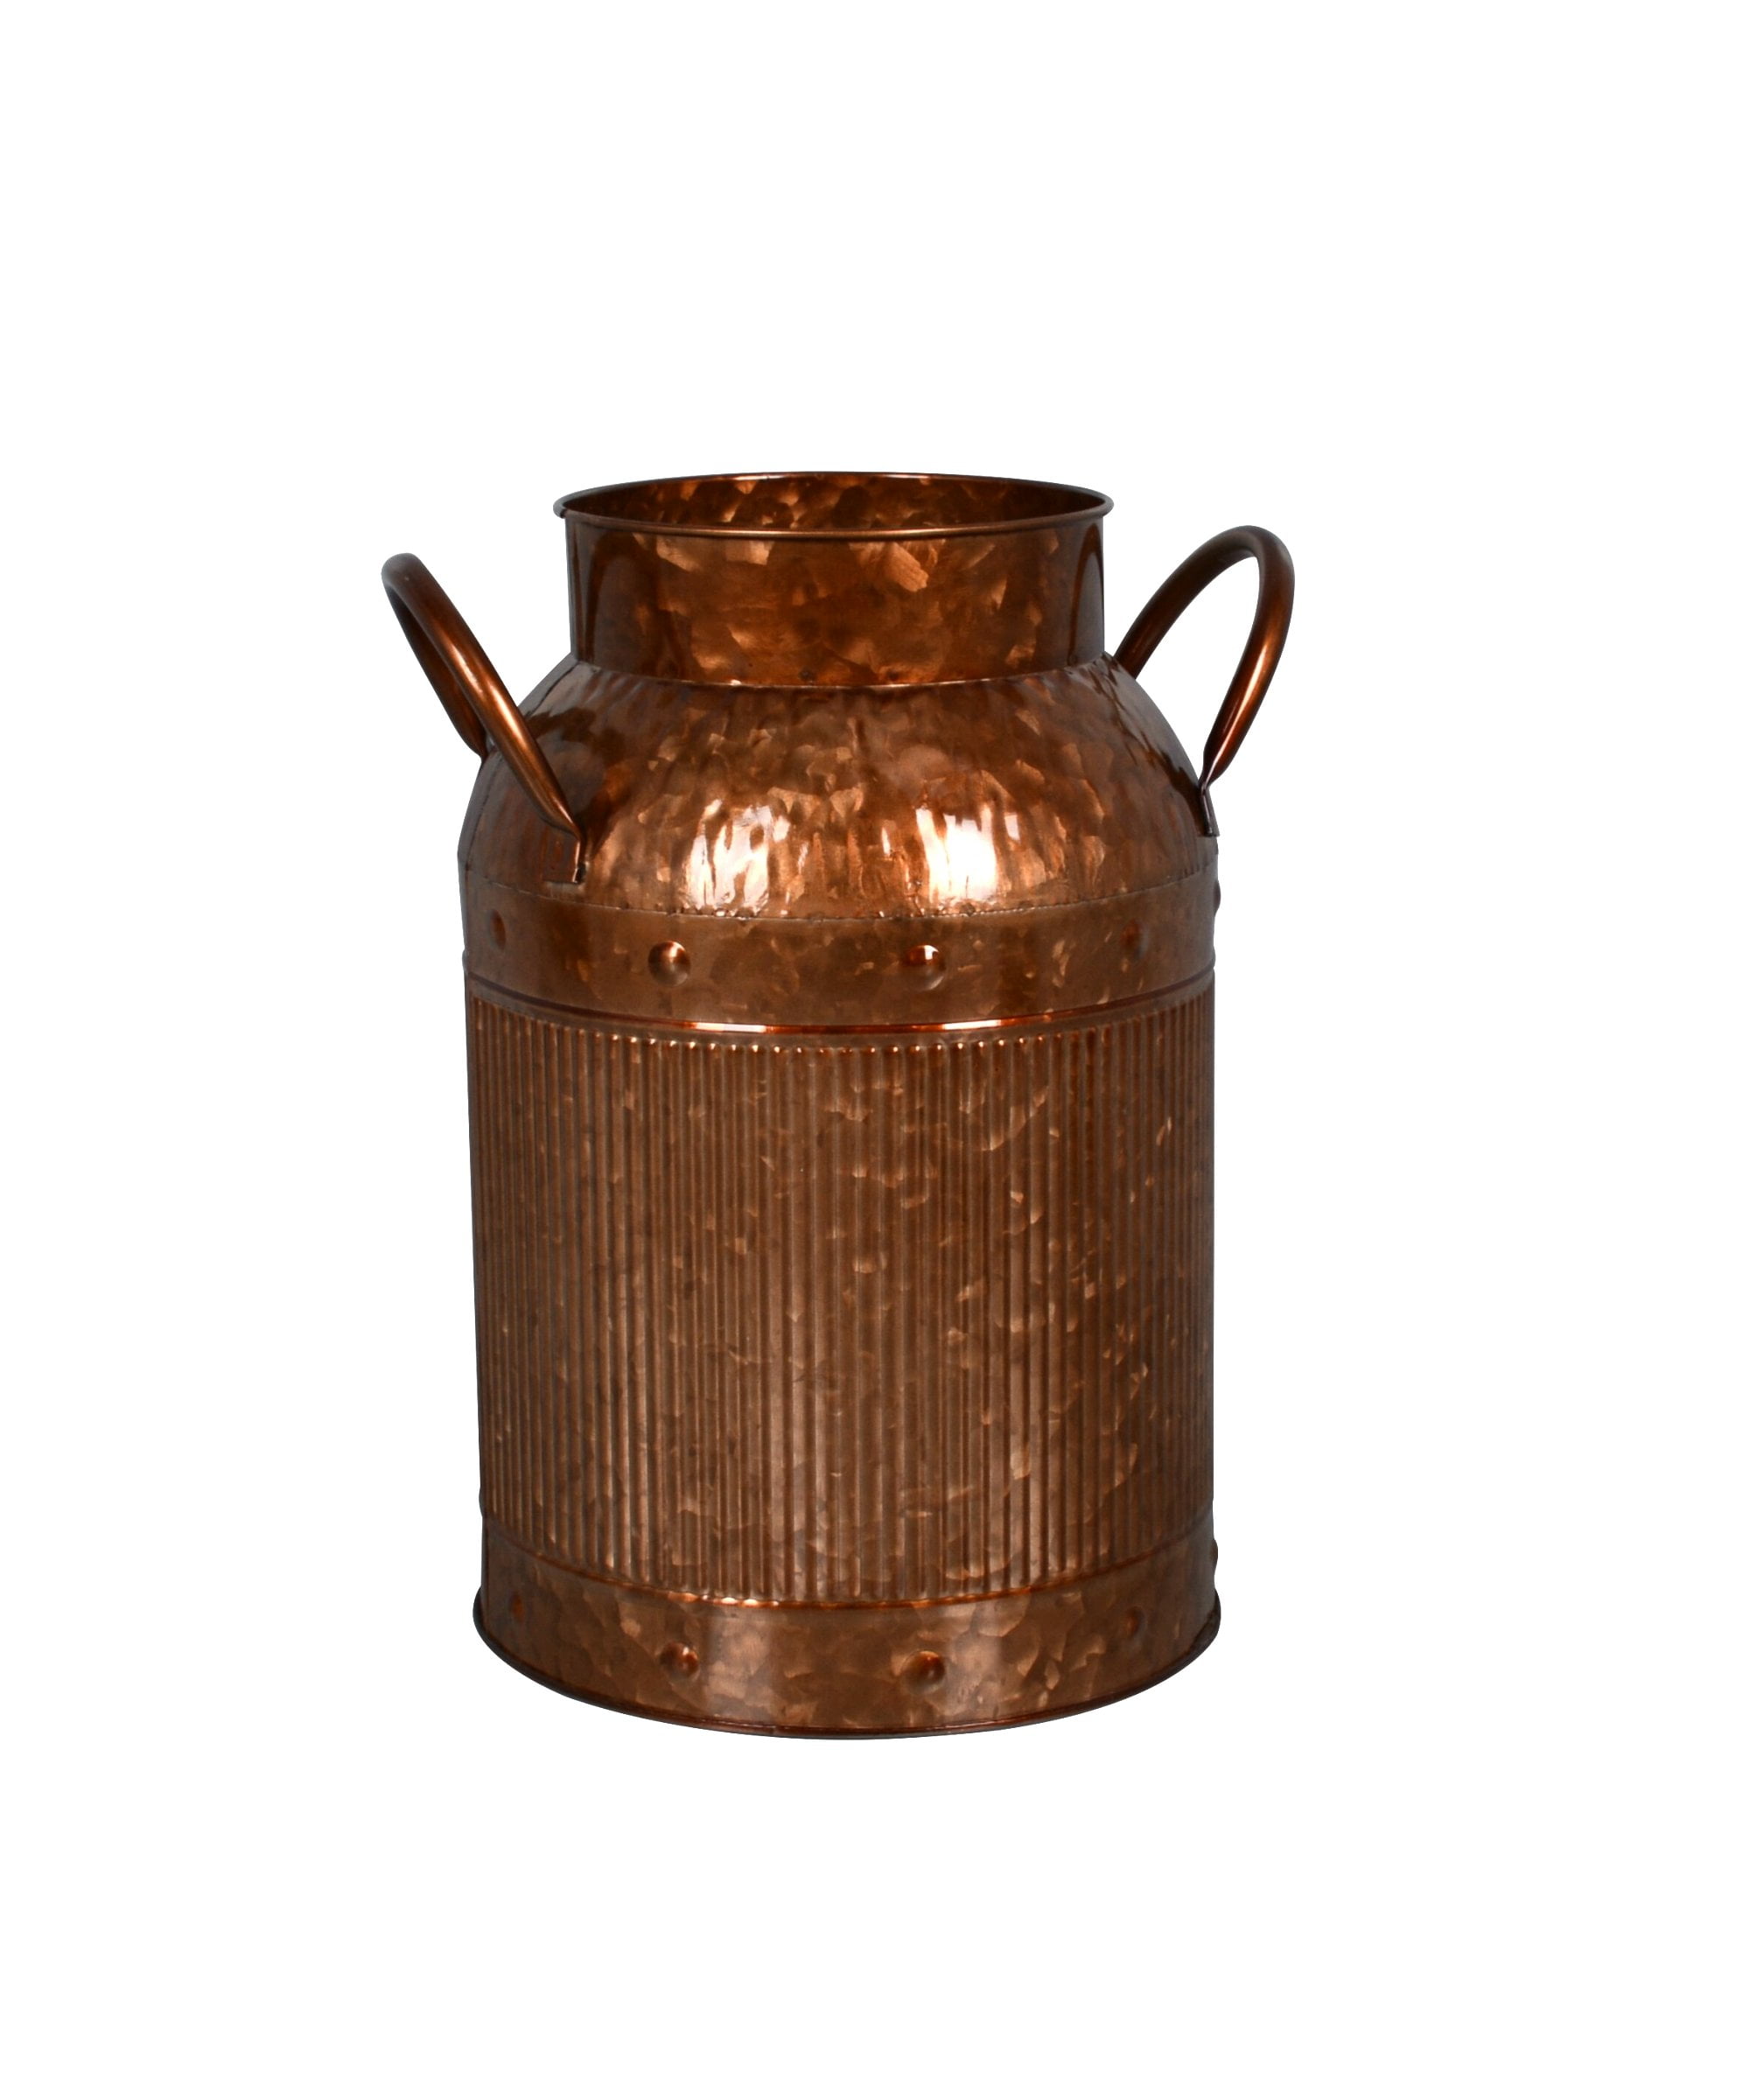 Mainstays 10.75" Rustic Copper Metal Decorative Planter Vase with Handles